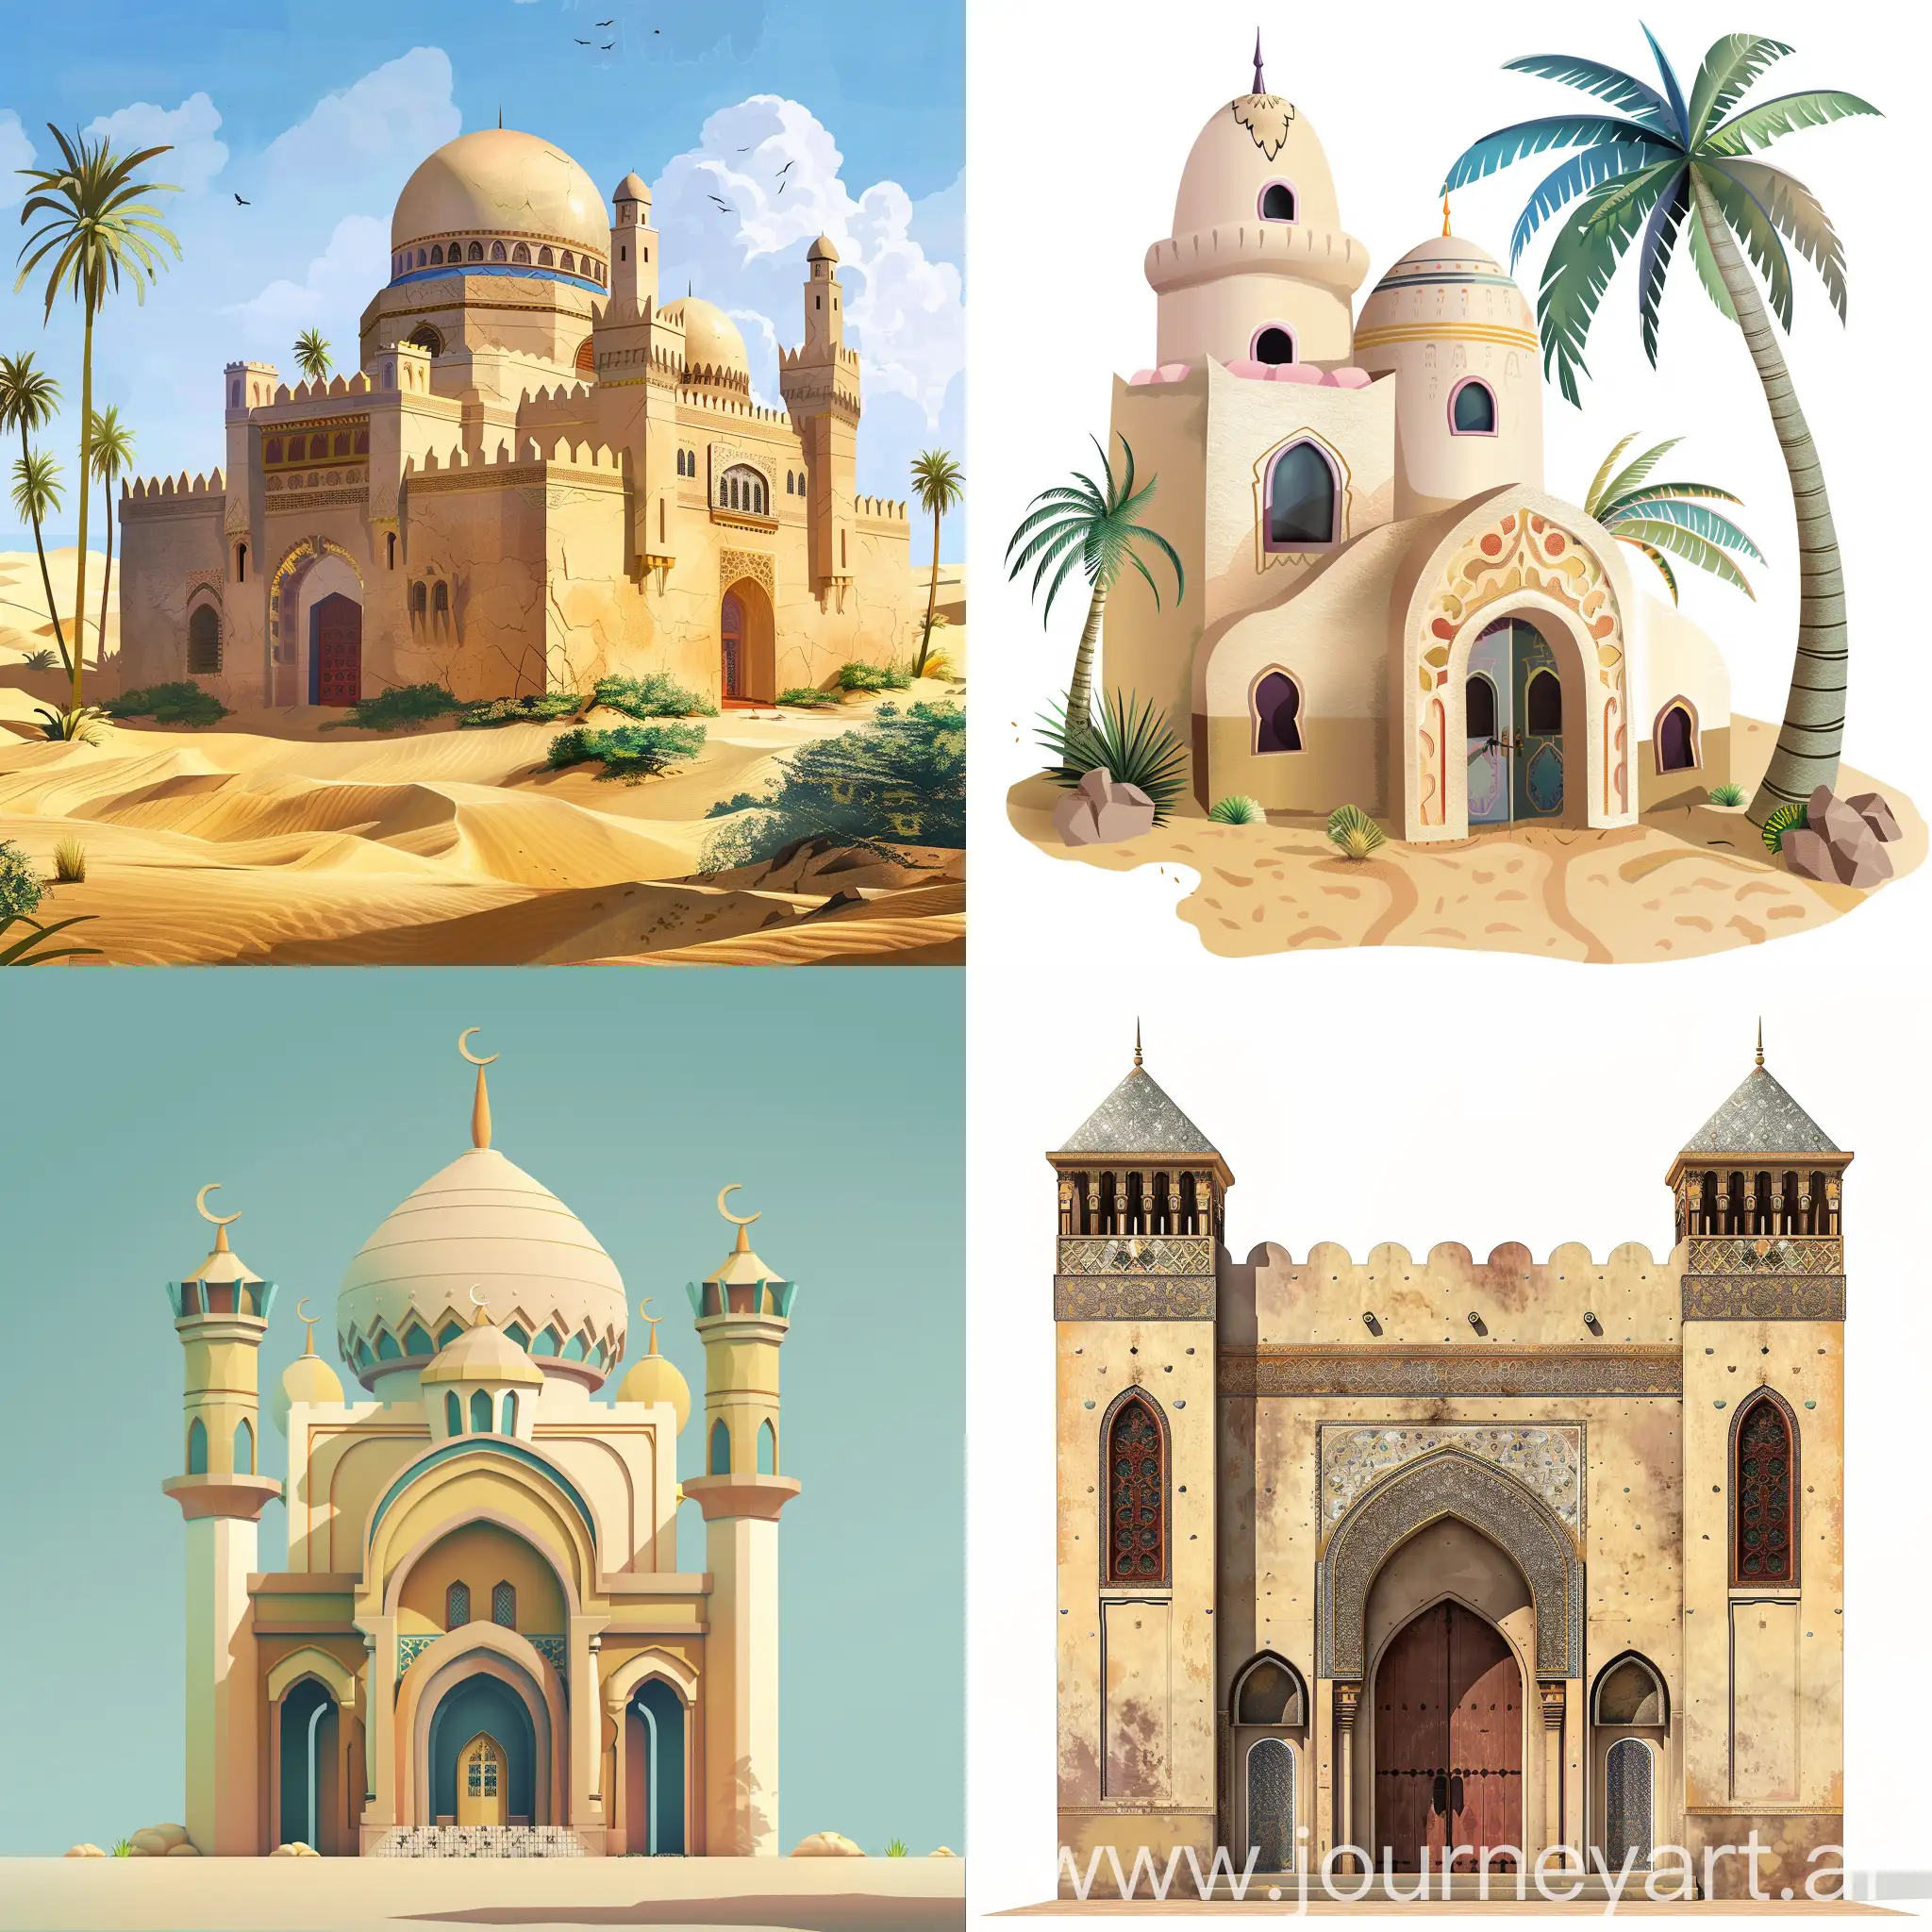 stylized Arabian building